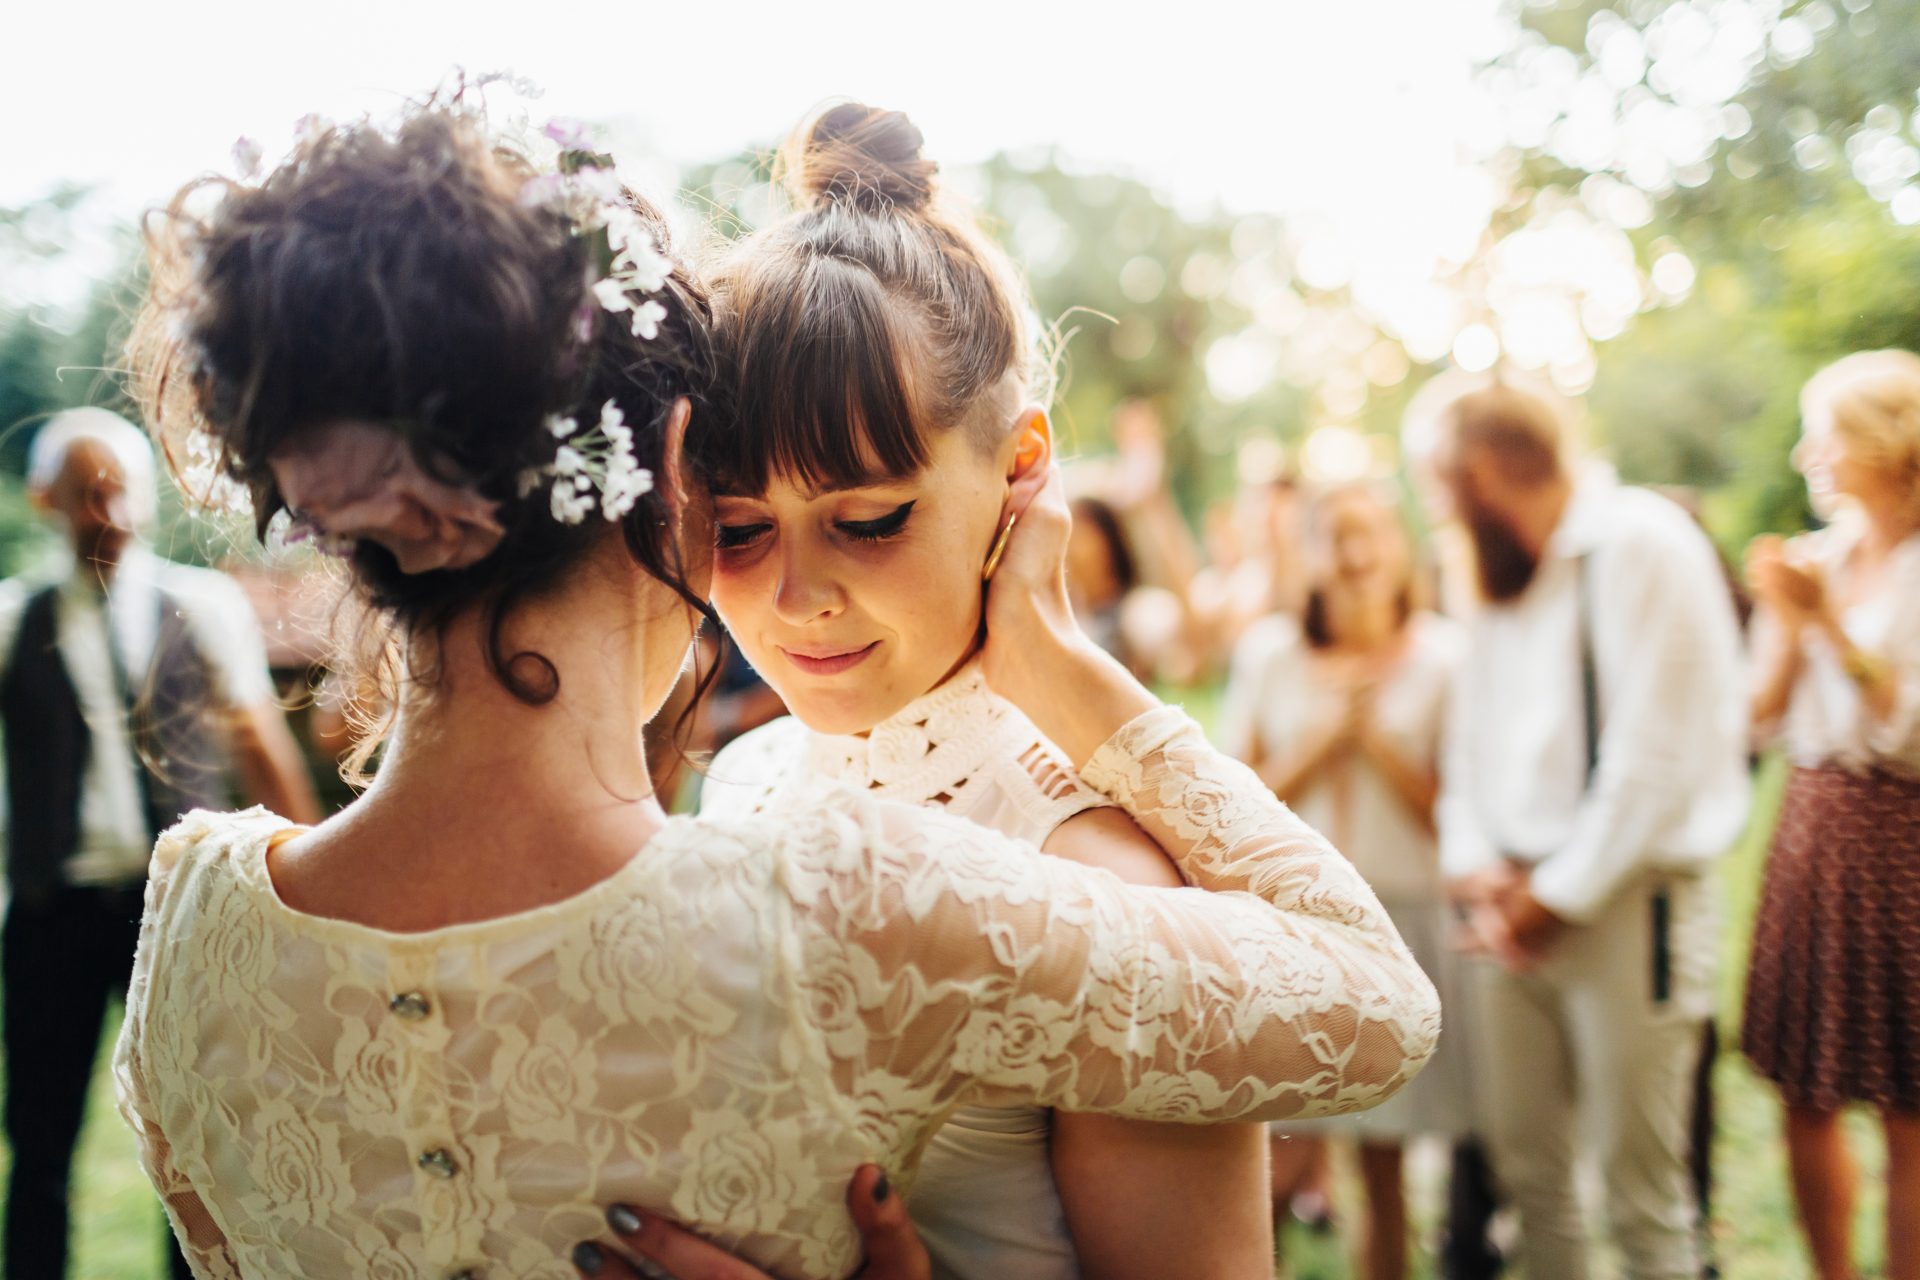 A global report on weddings